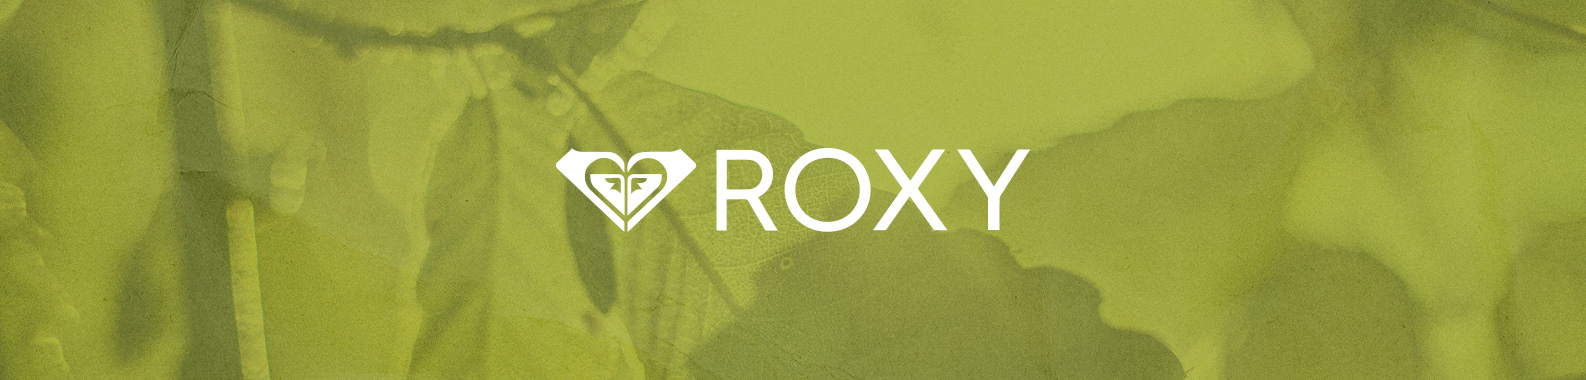 Roxy brand header image